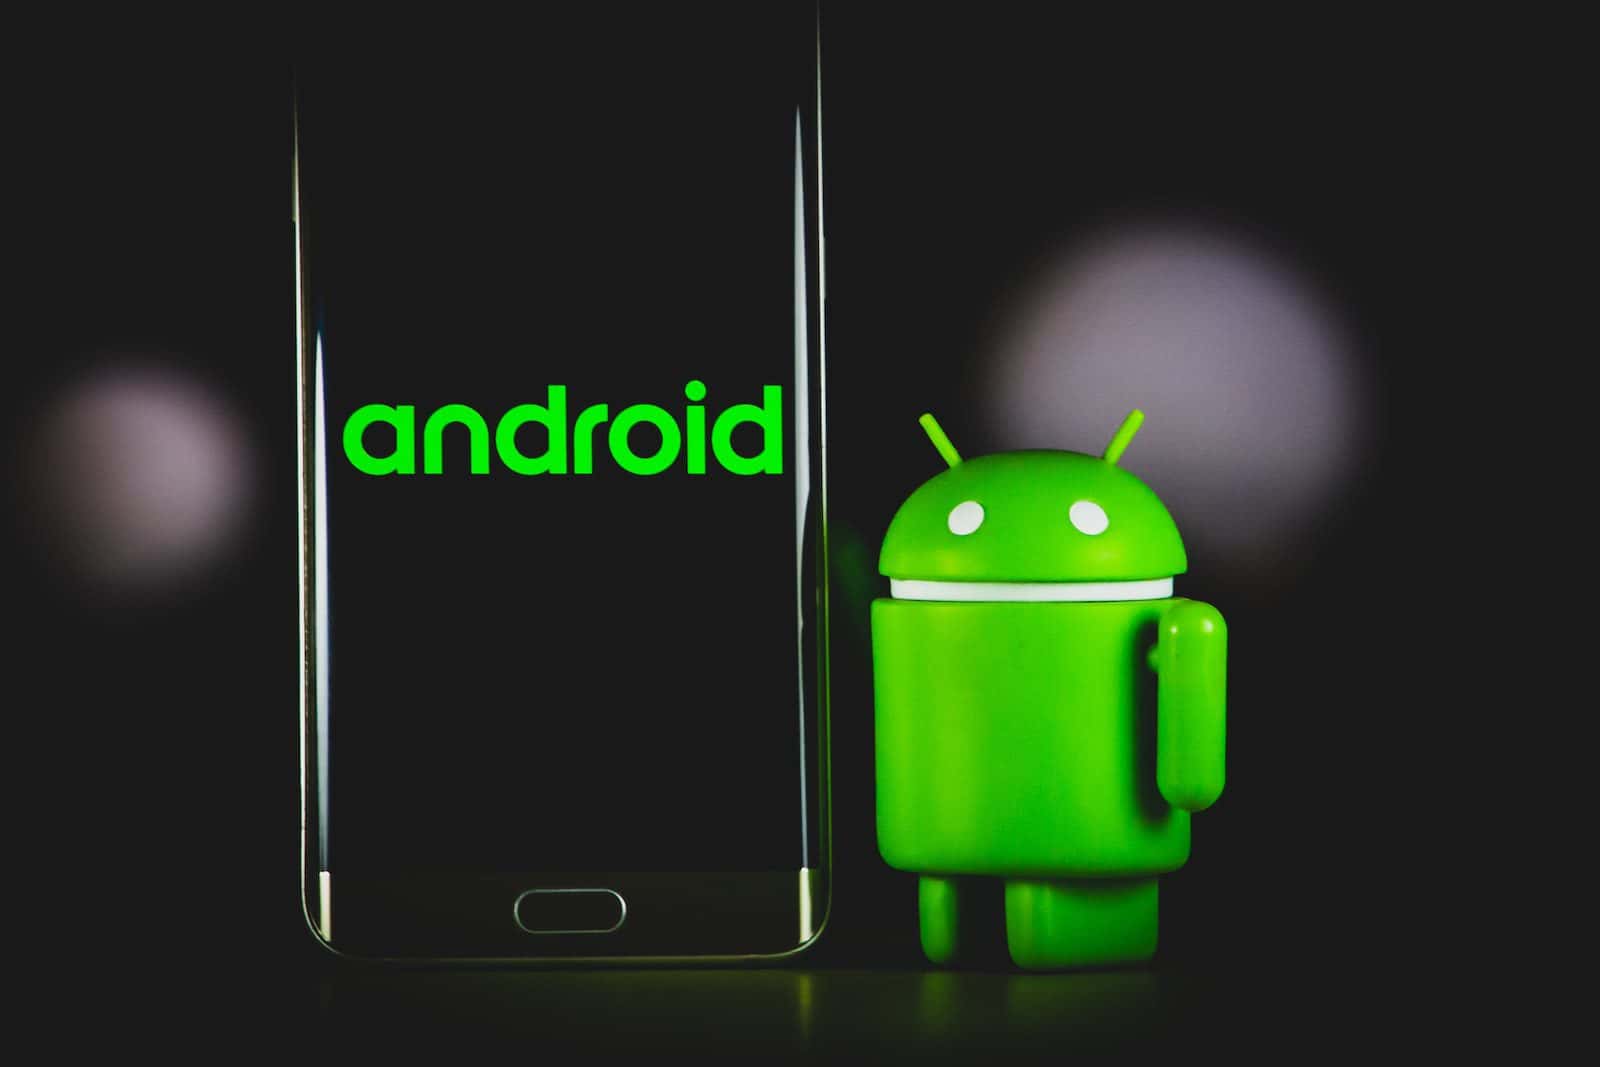 capa de iphone de sapo verde ao lado de smartphone android samsung preto